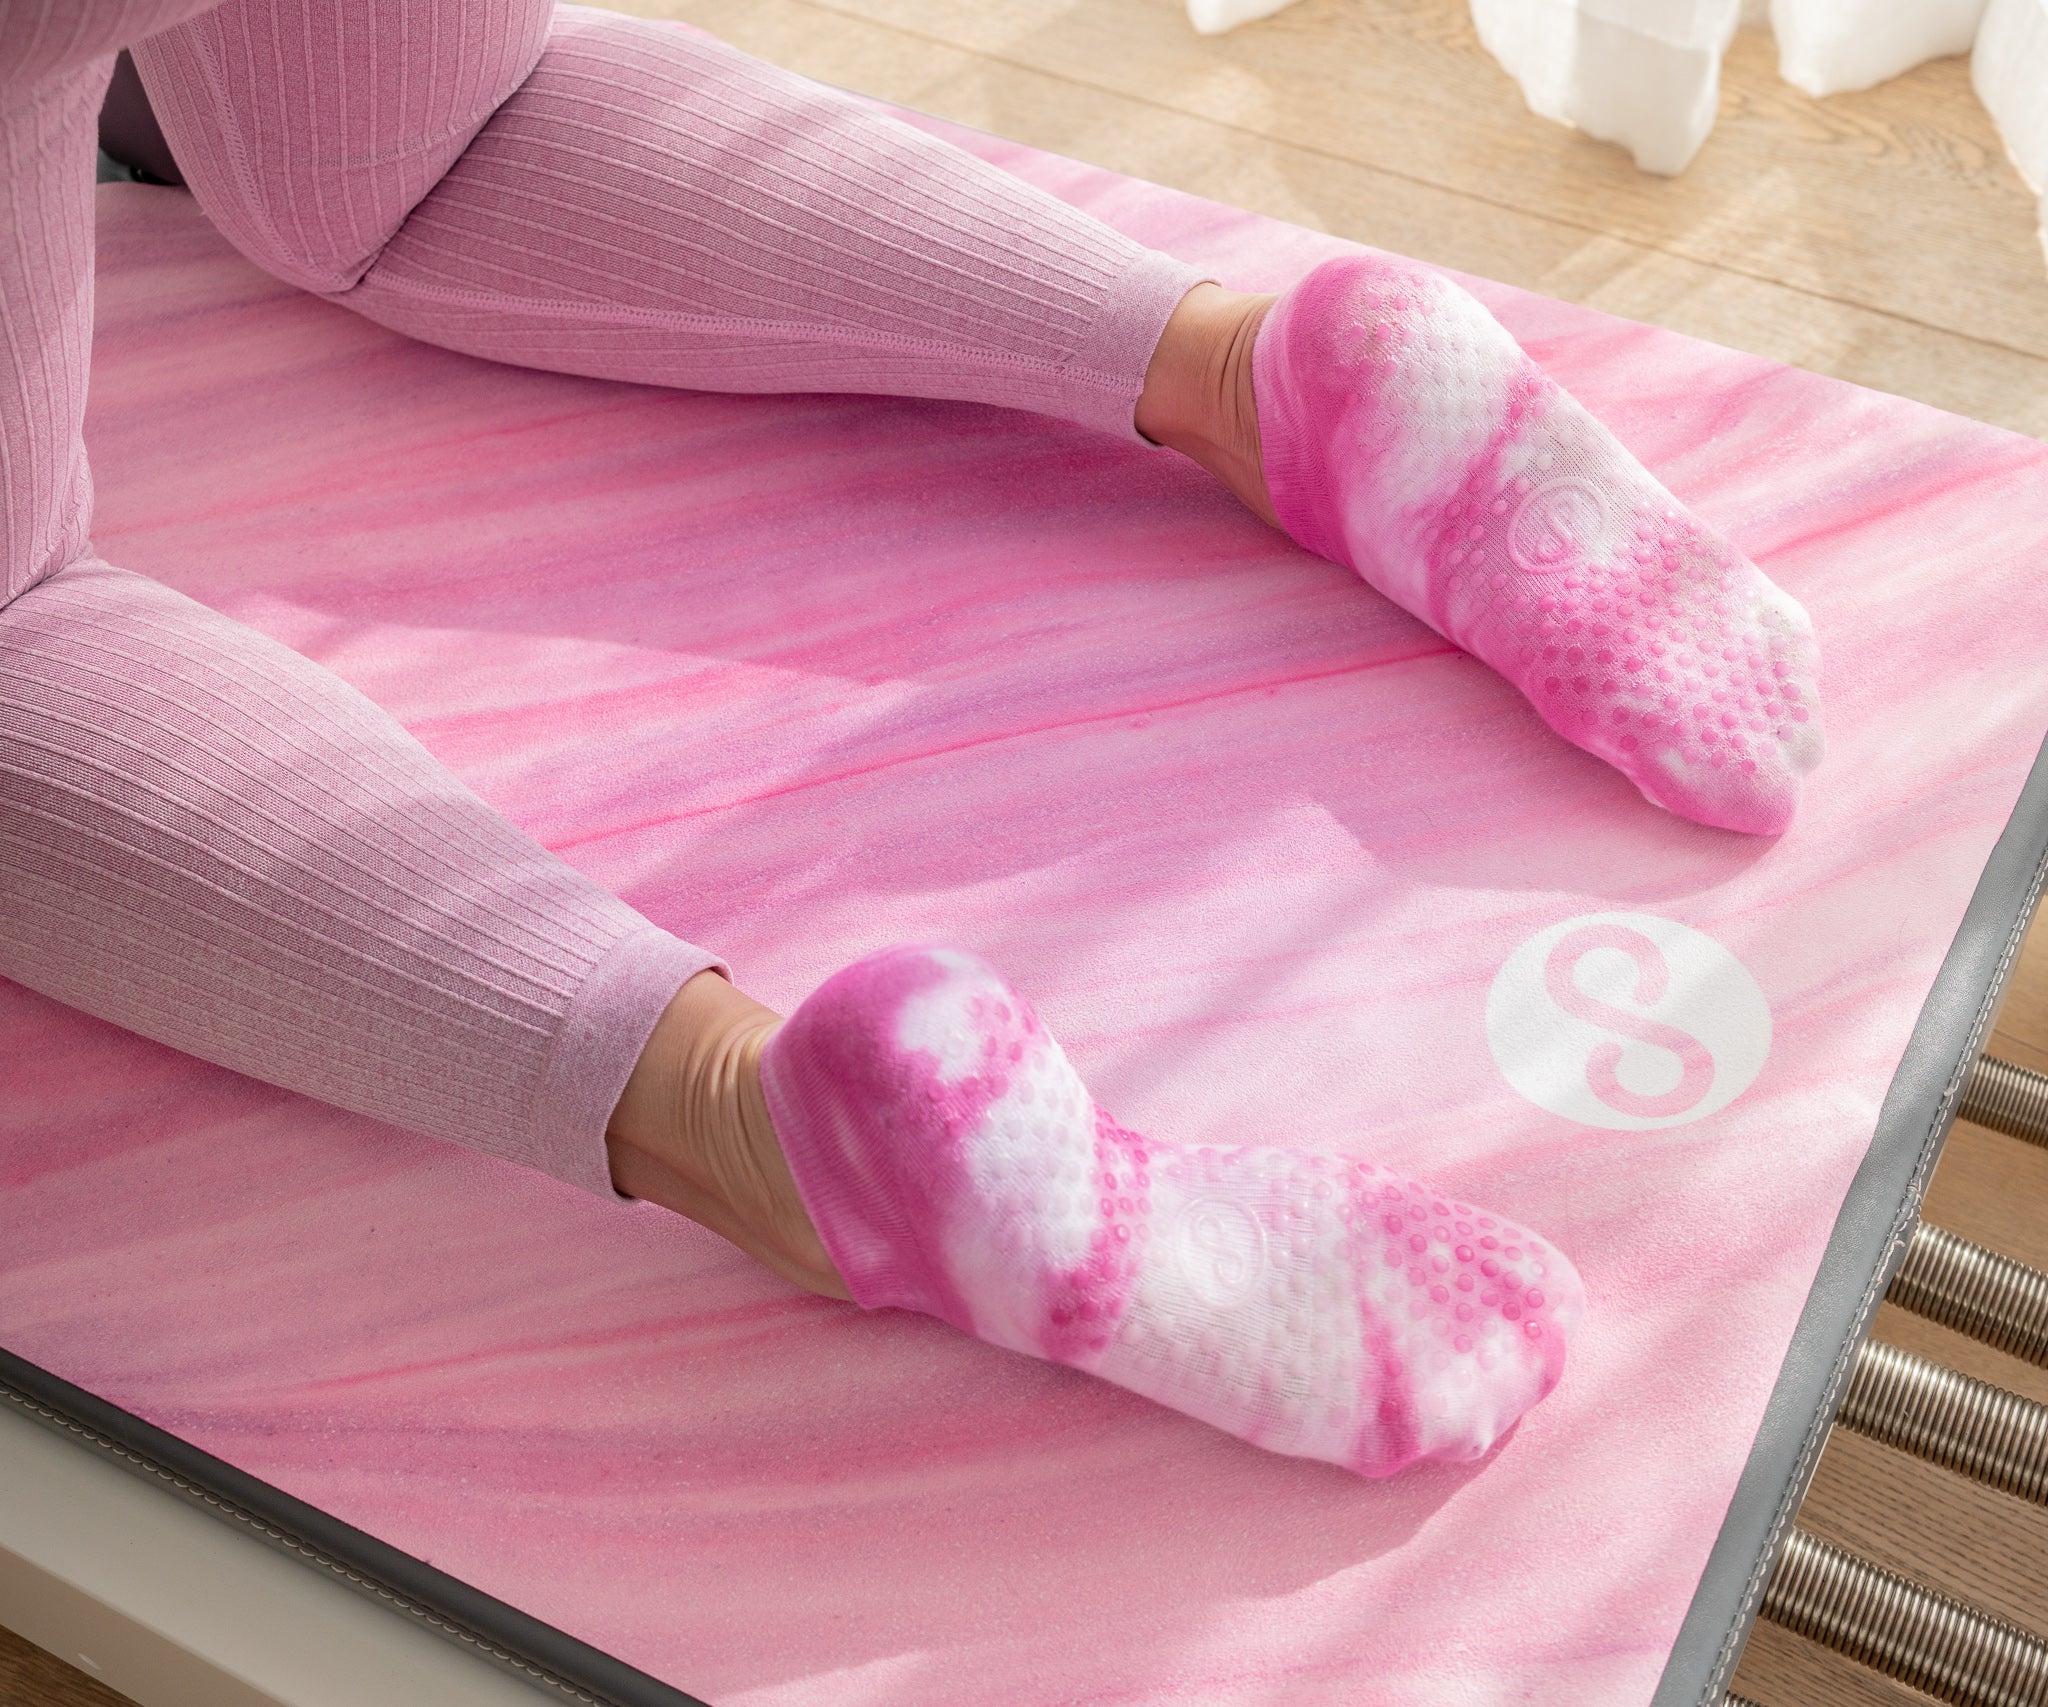 REFORMERMAT Micro-fibre Durable Reformer Pilates Yoga Mat Grip Socks - Pink Strawberry Milk Stripe Design